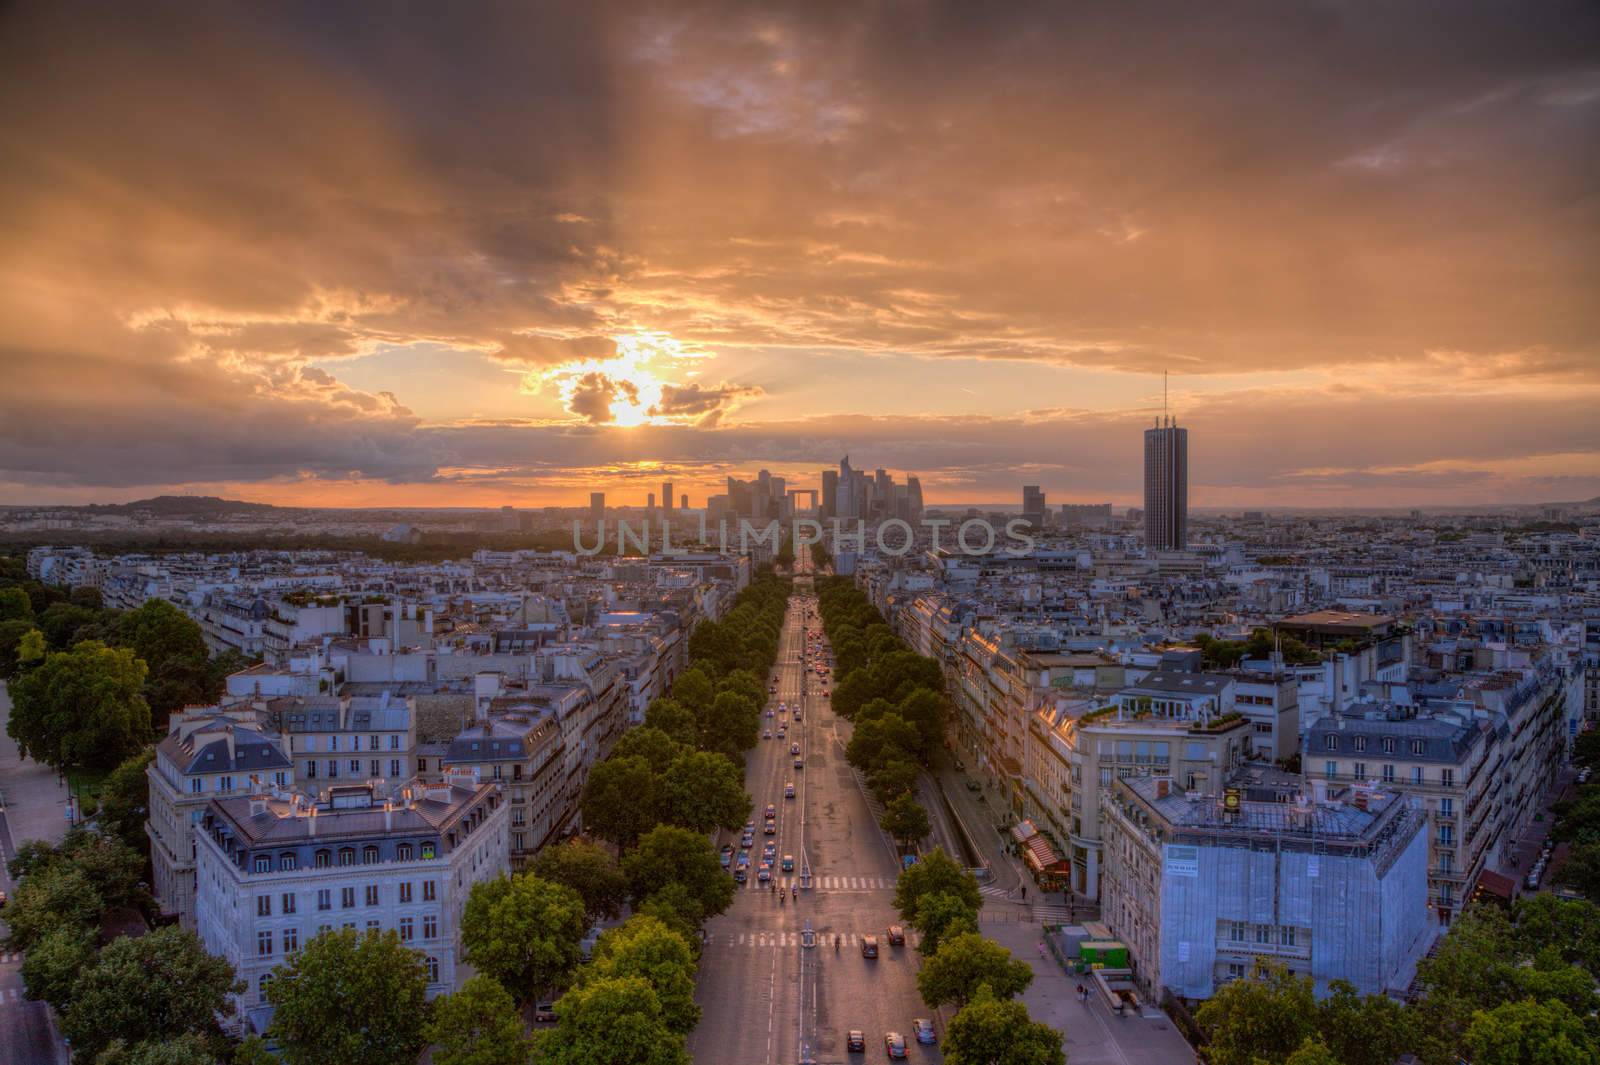 Sunset over La Defense, Paris by Harvepino